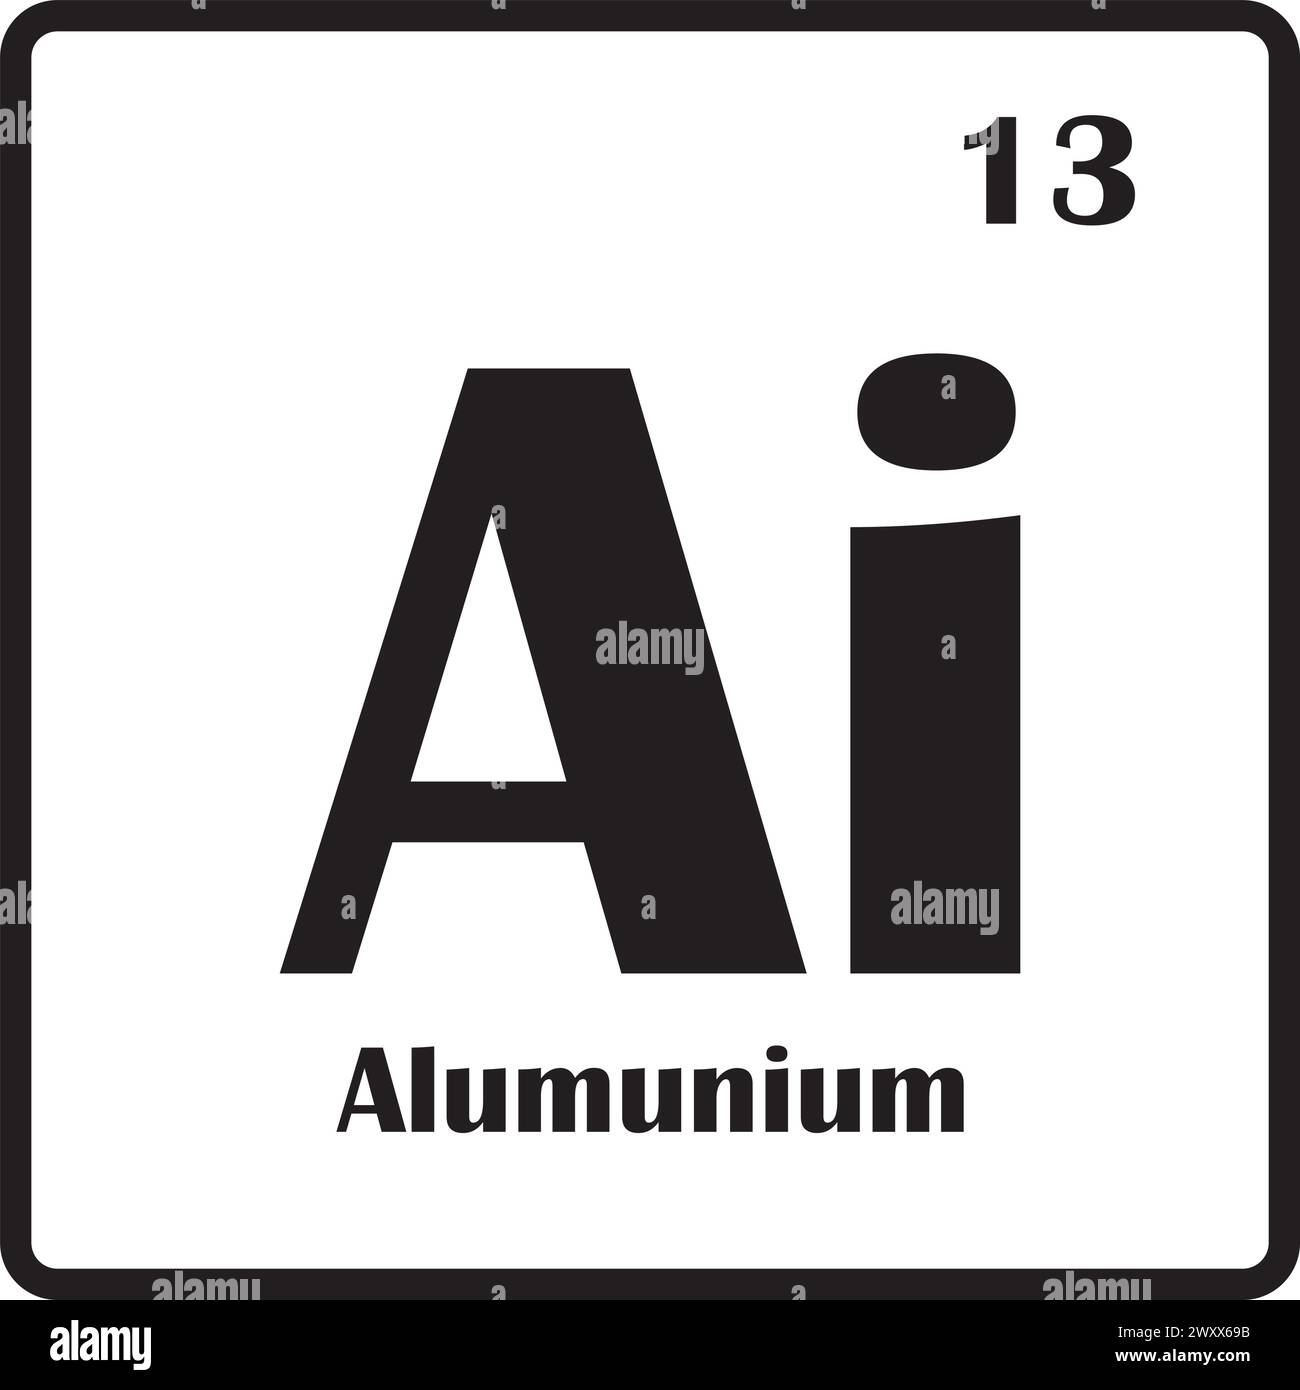 Aluminum Element Vector icon, Periodic Table Element Stock Vector